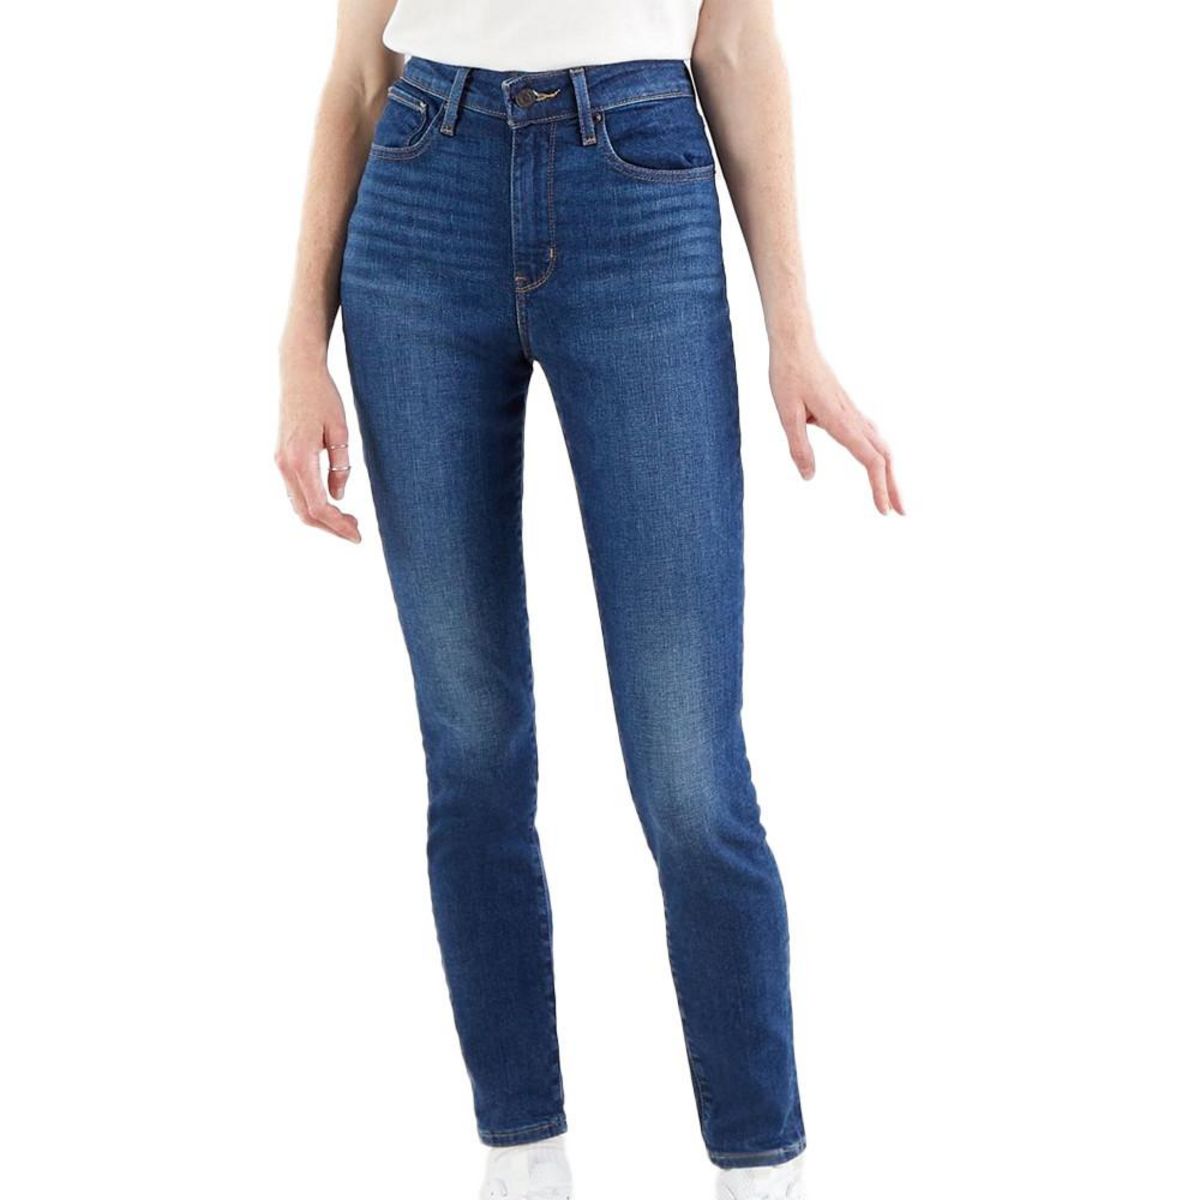  Jeans Skinny Bleu Femme Levi's 721